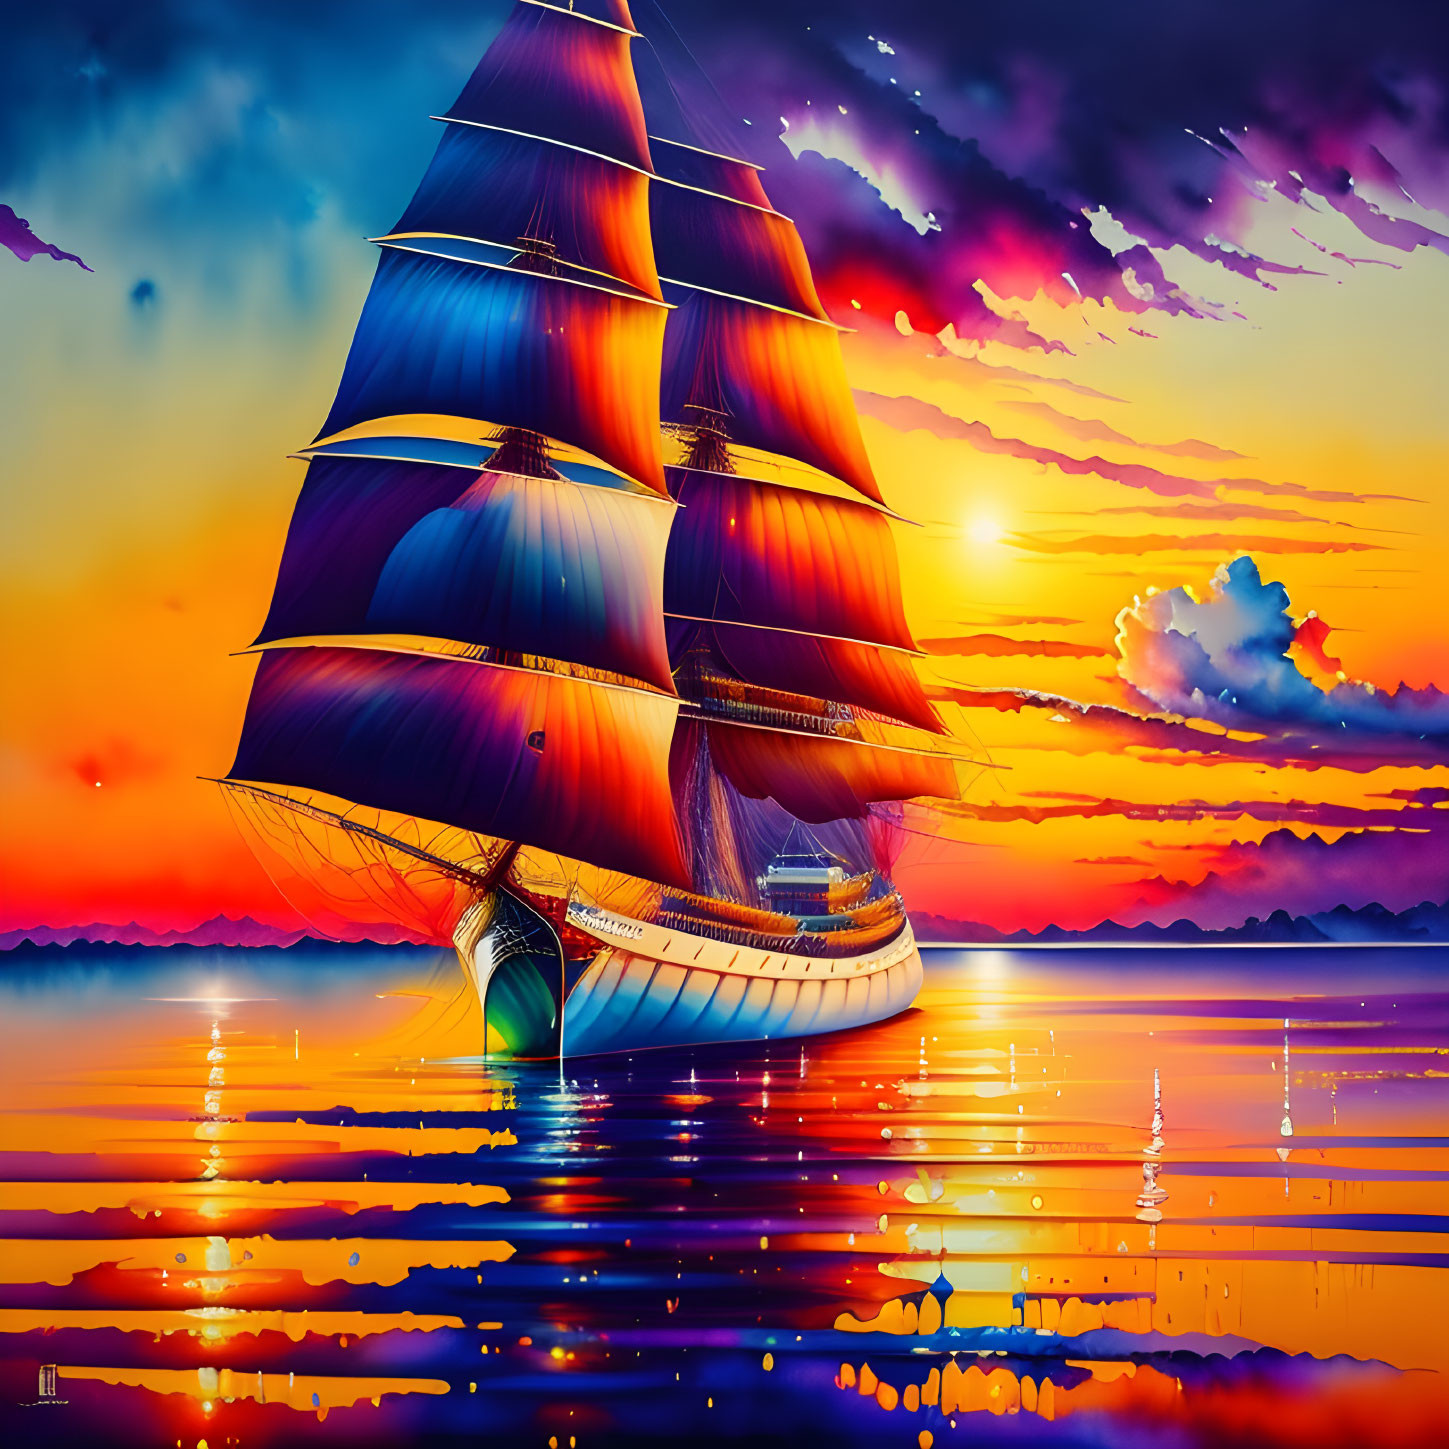 Colorful Digital Artwork: Sailing Ship on Reflective Ocean at Sunset